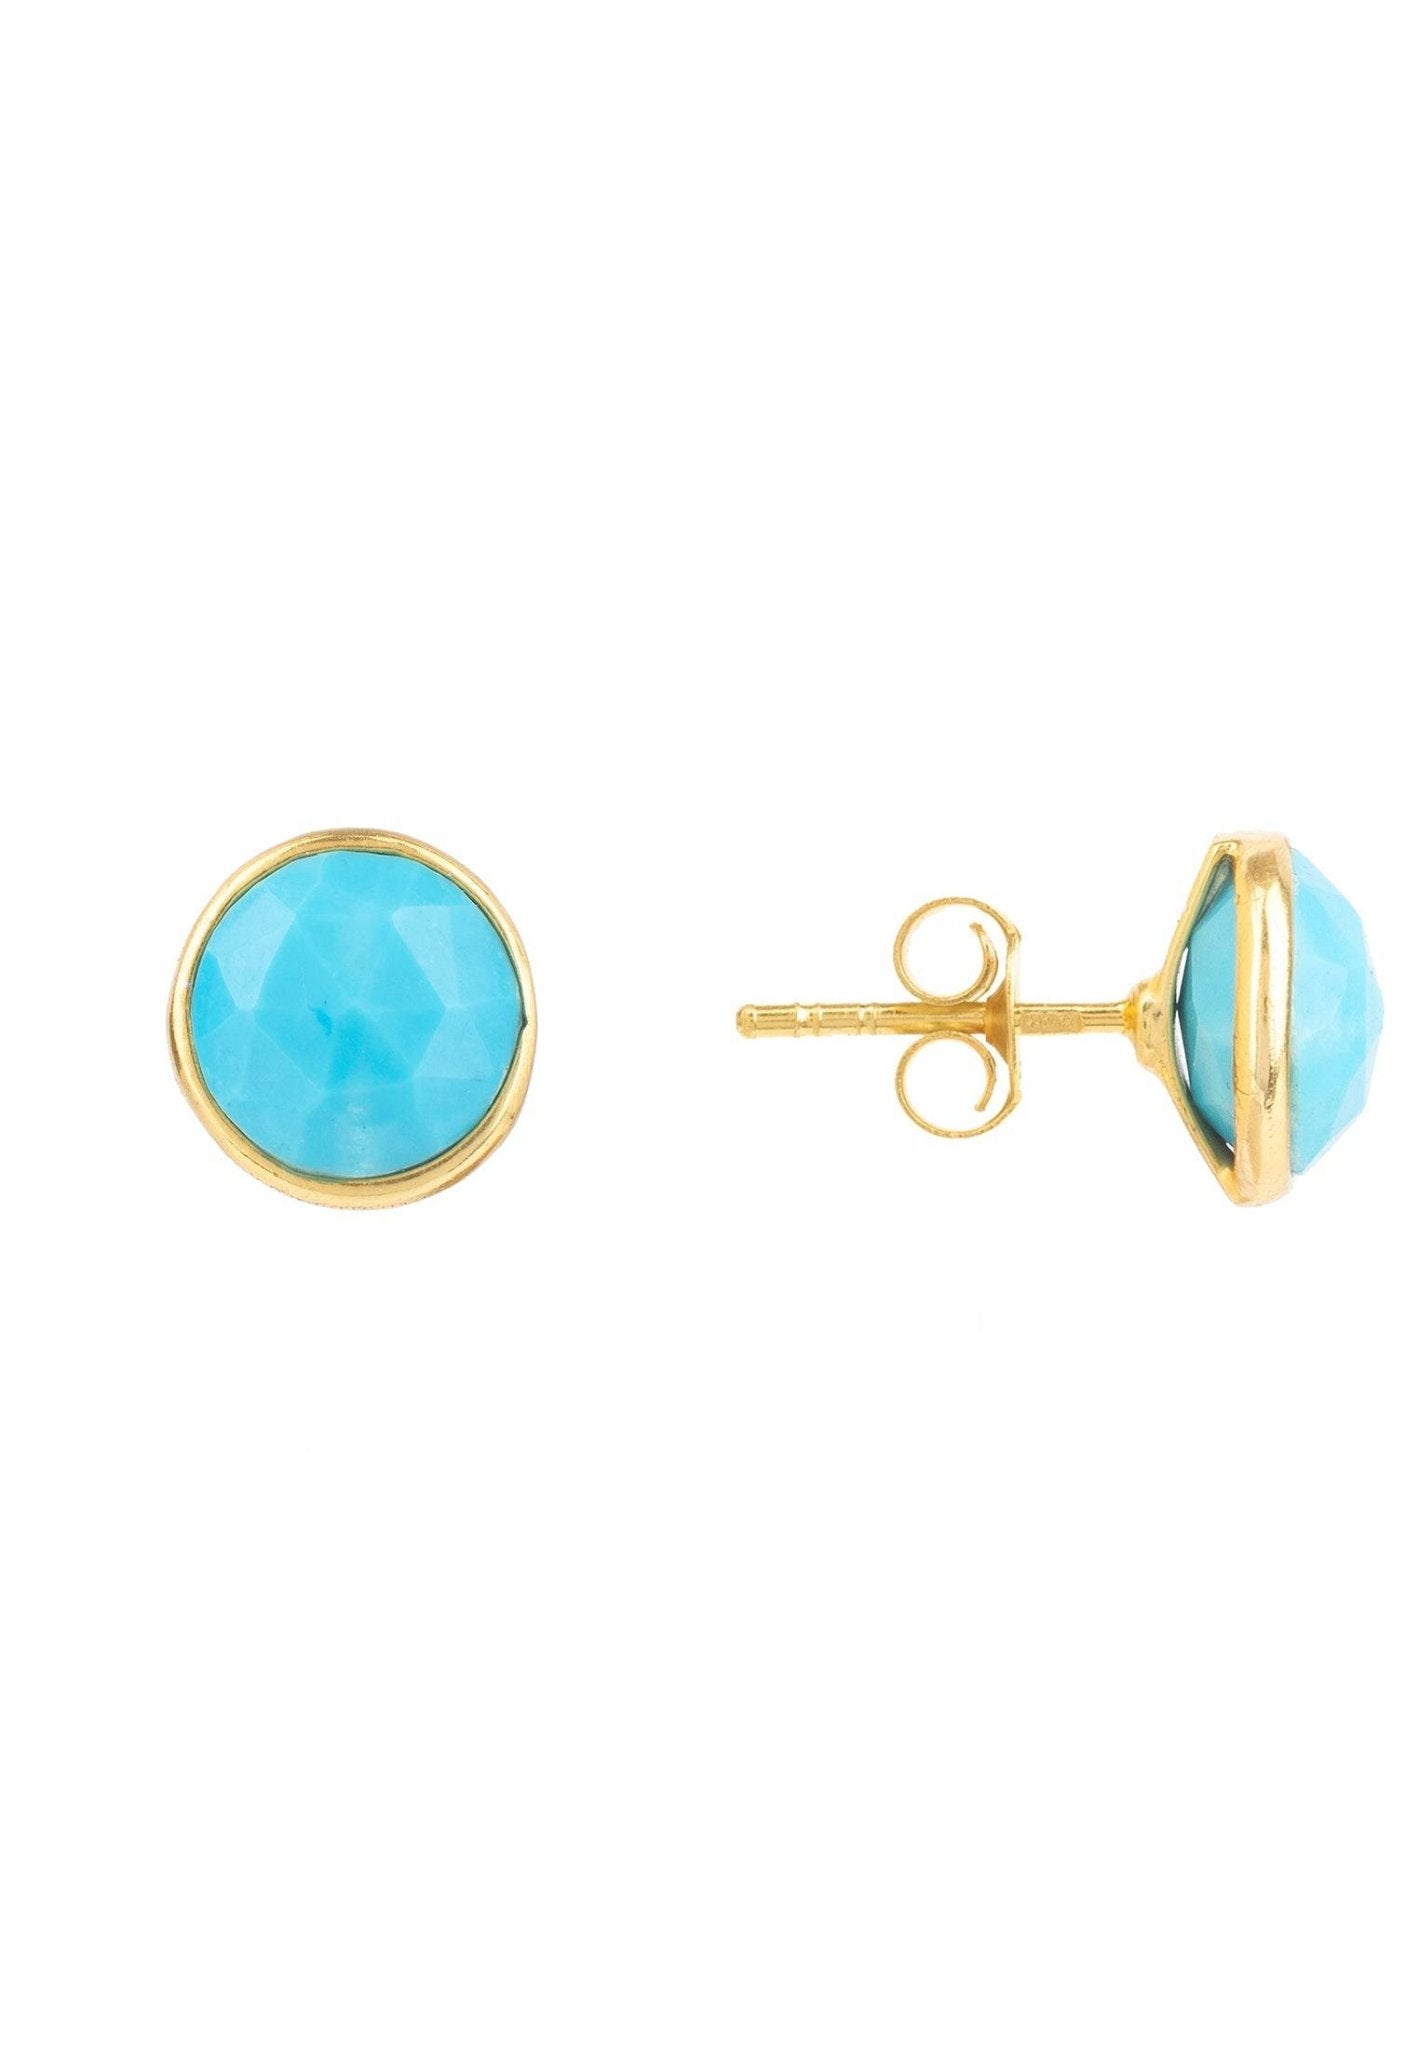 Medium Circle Gemstone Earrings Gold Turquoise - LATELITA Earrings